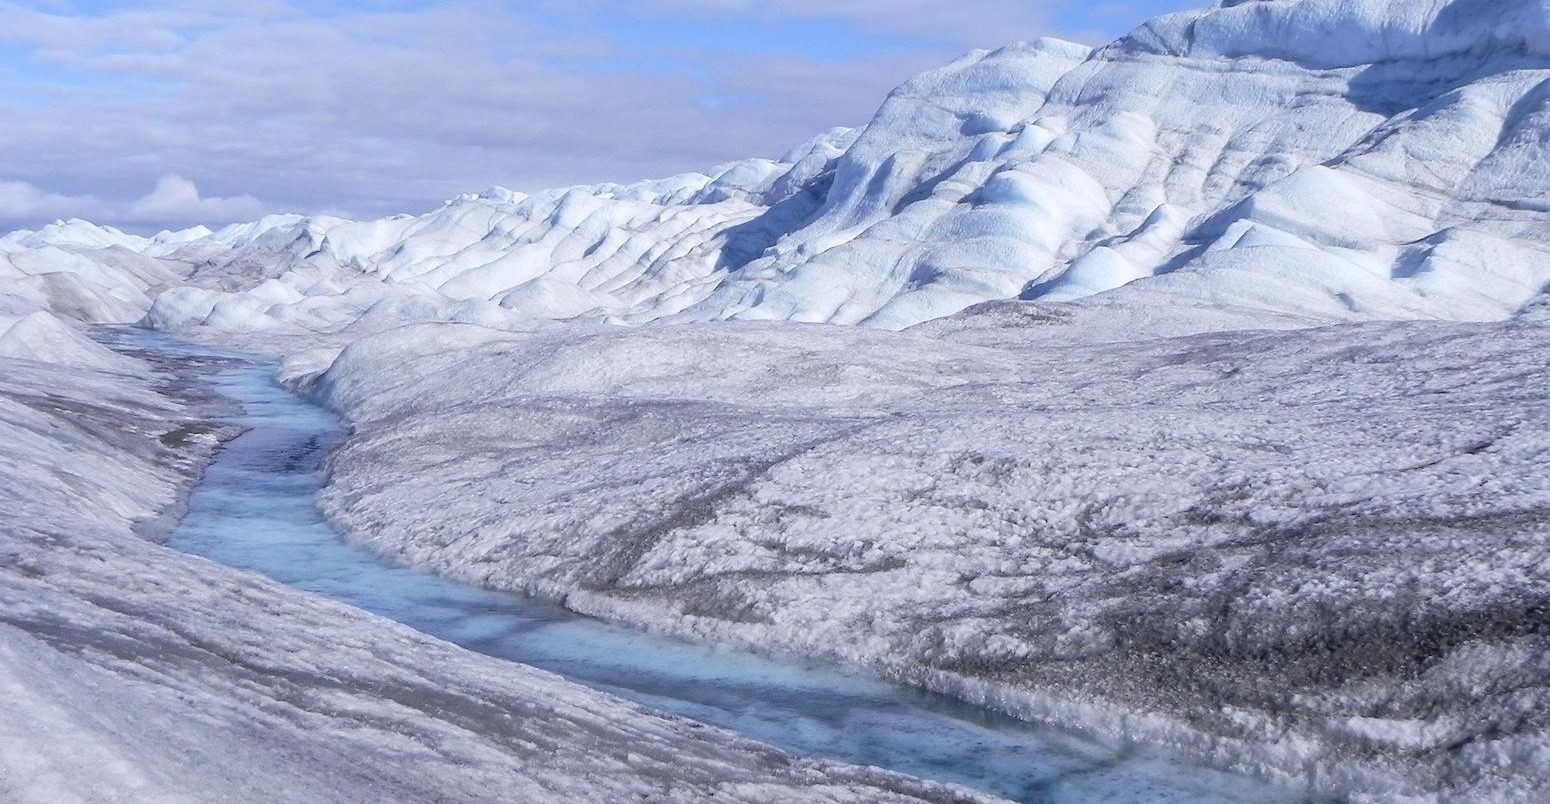 Greenland ice sheet. Credit: elementix / Alamy Stock Photo.